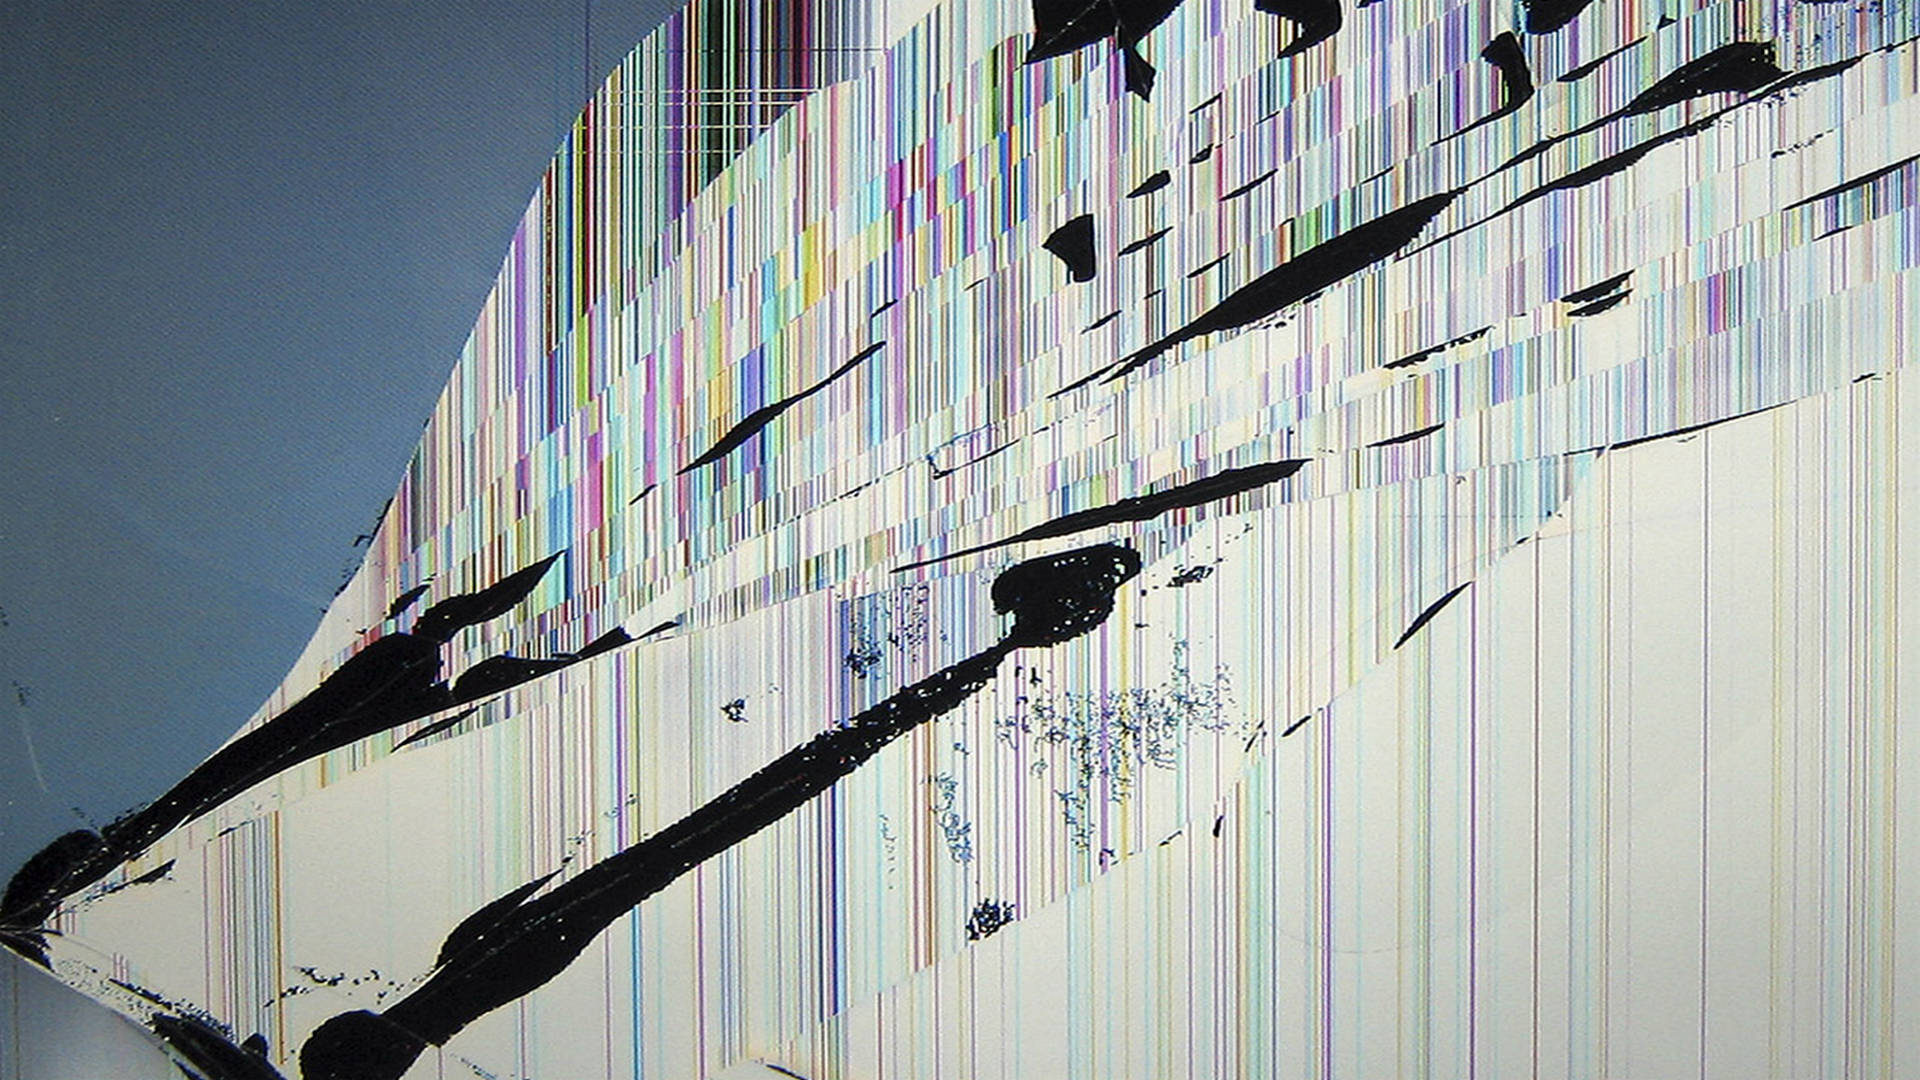 Broken Screen 1920X1080 Wallpaper and Background Image